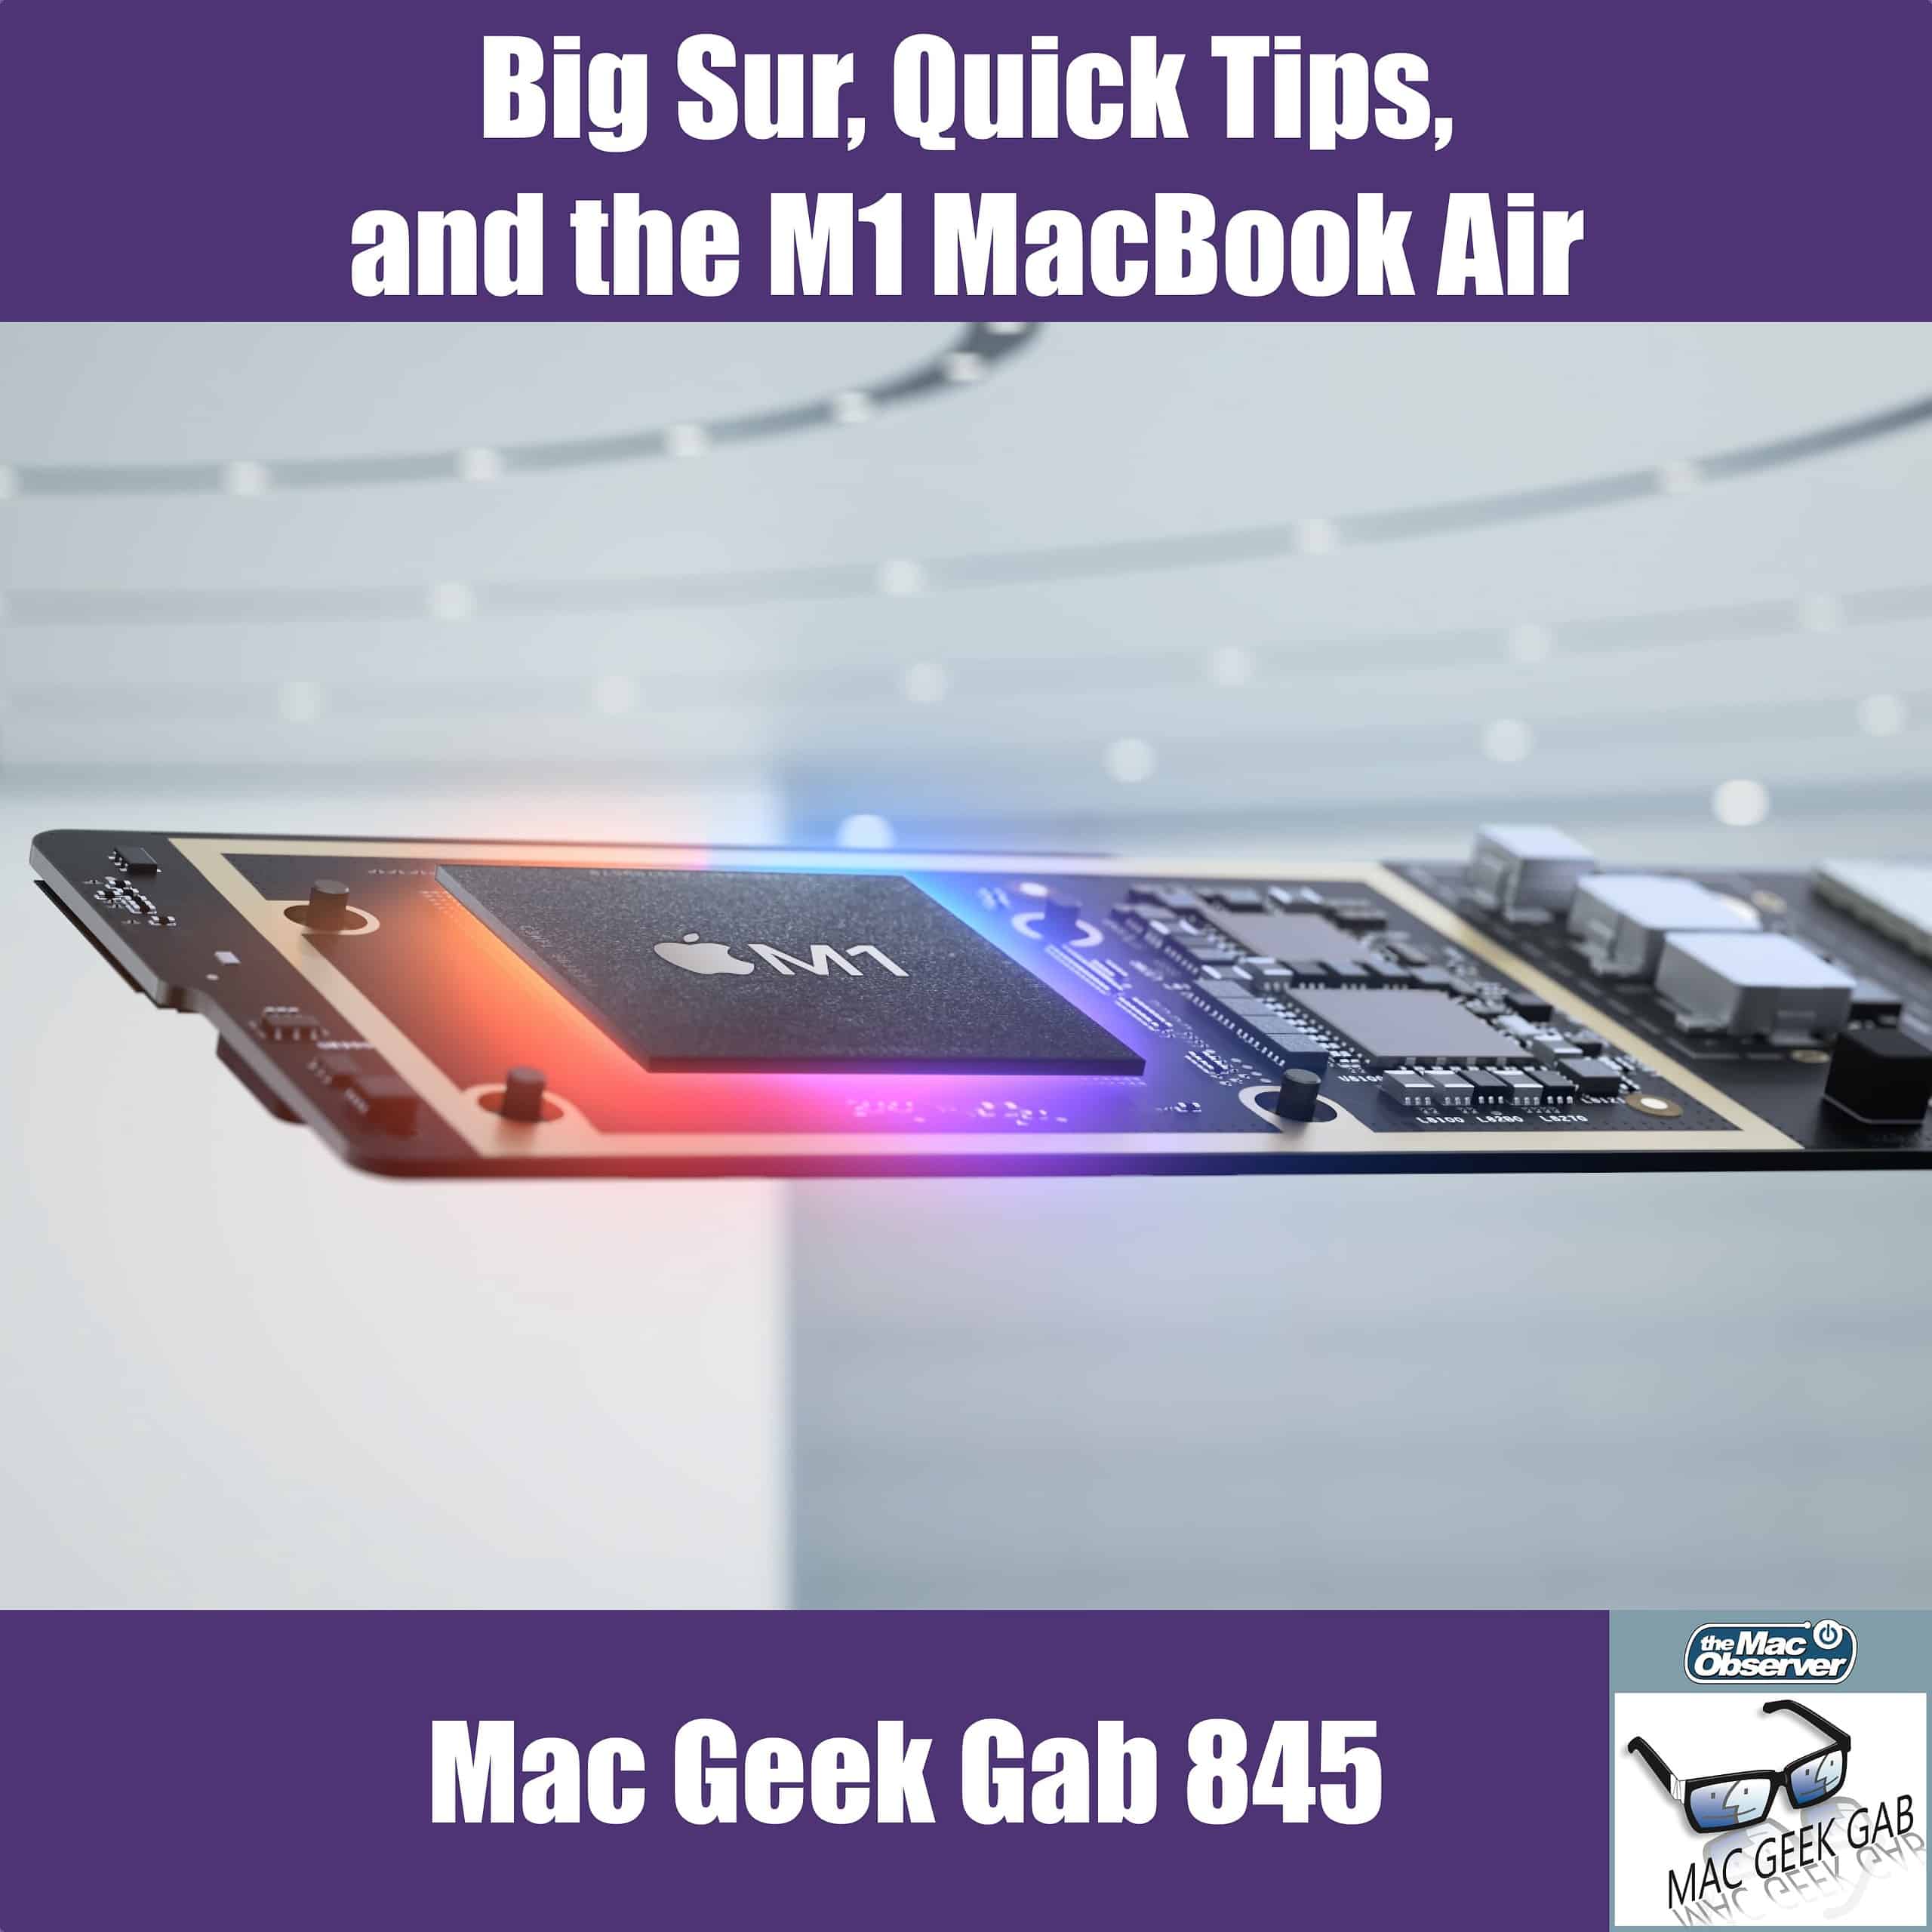 Big Sur, the M1 MacBook Air, and Quick Tips — Mac Geek Gab 845